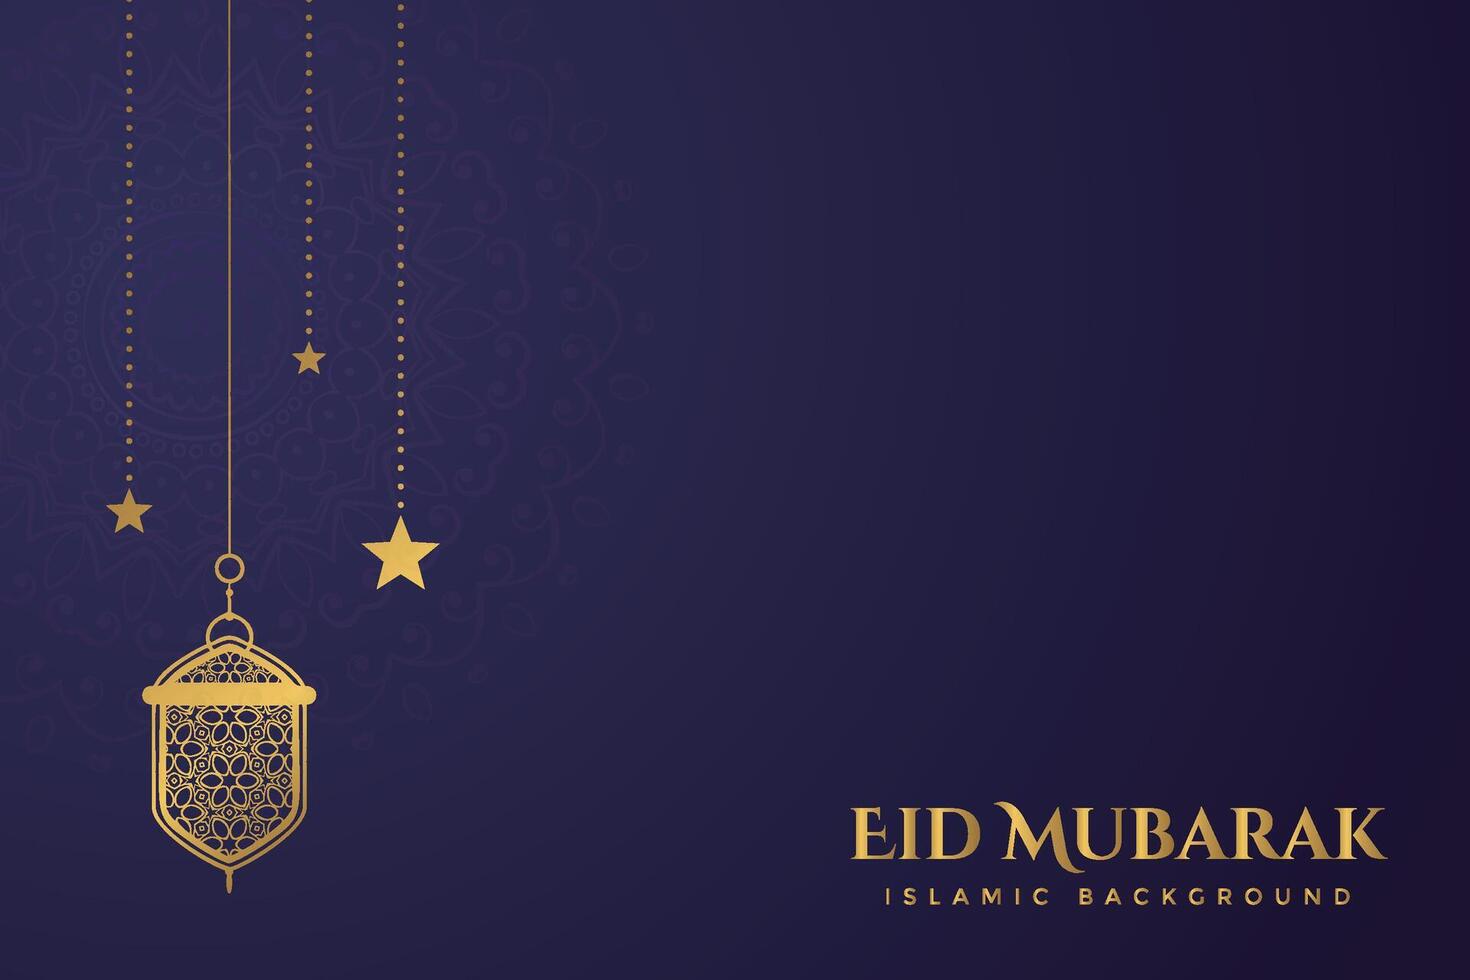 eid al-fitr, Ramadhan dekorativ Gruß Karte vektor